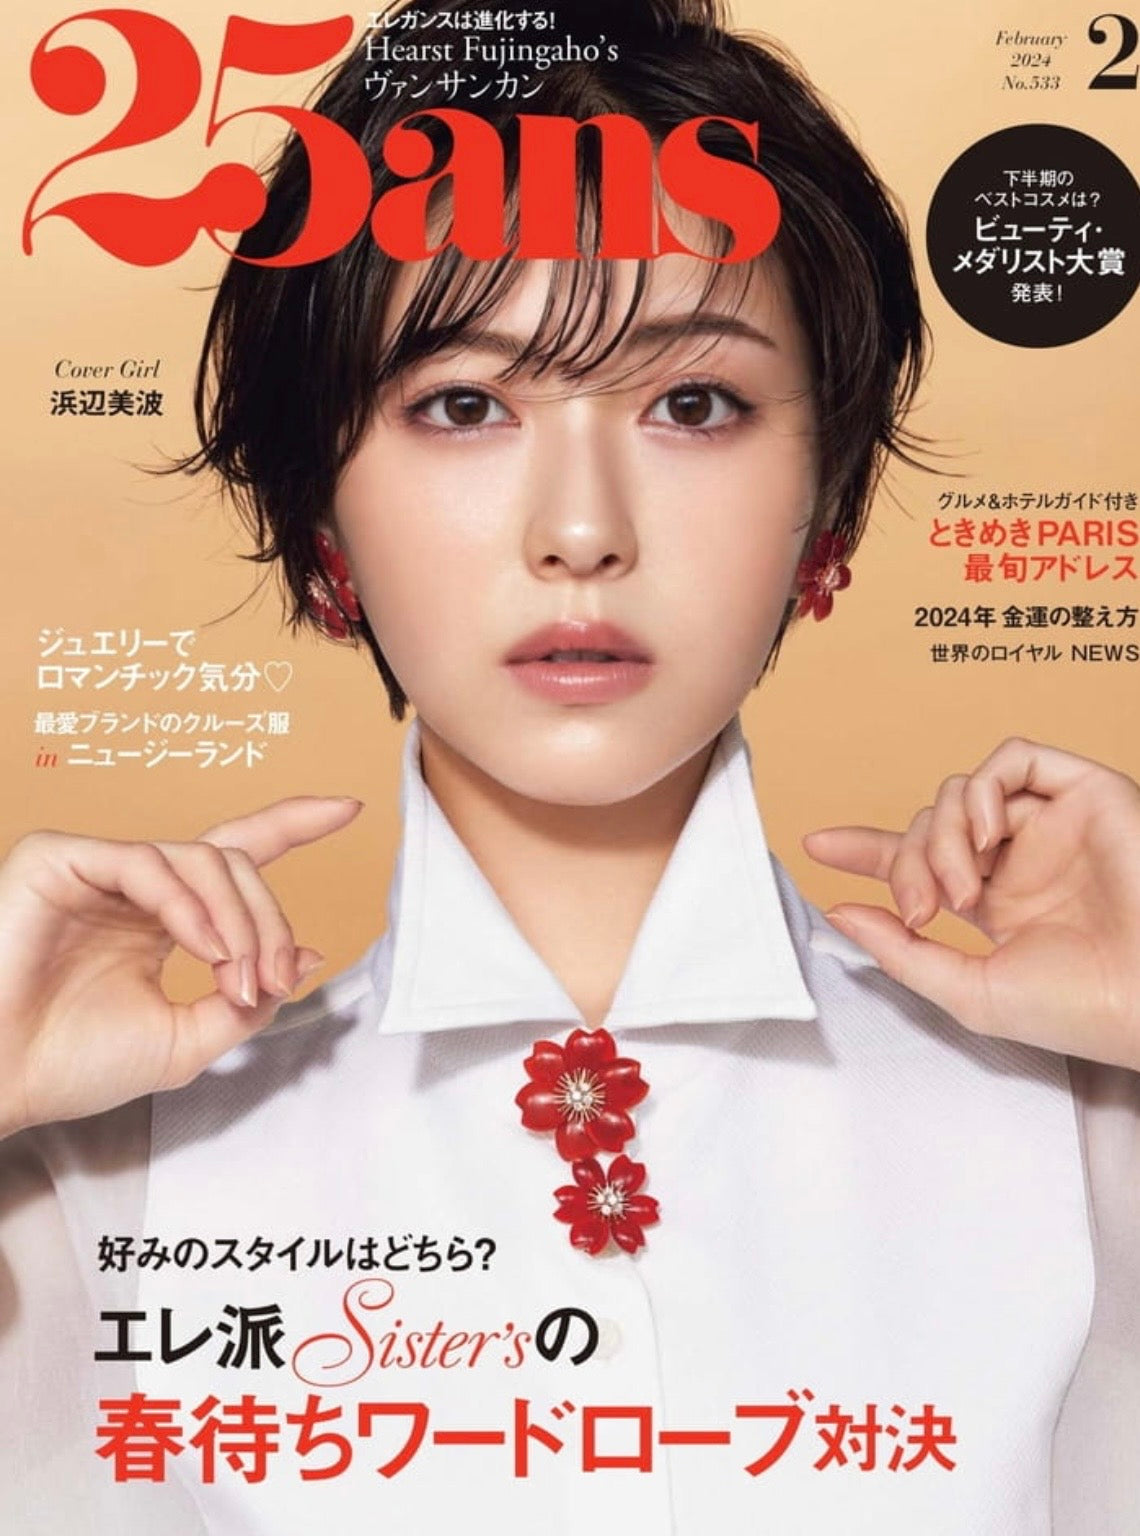 Magazine “25ans” cover